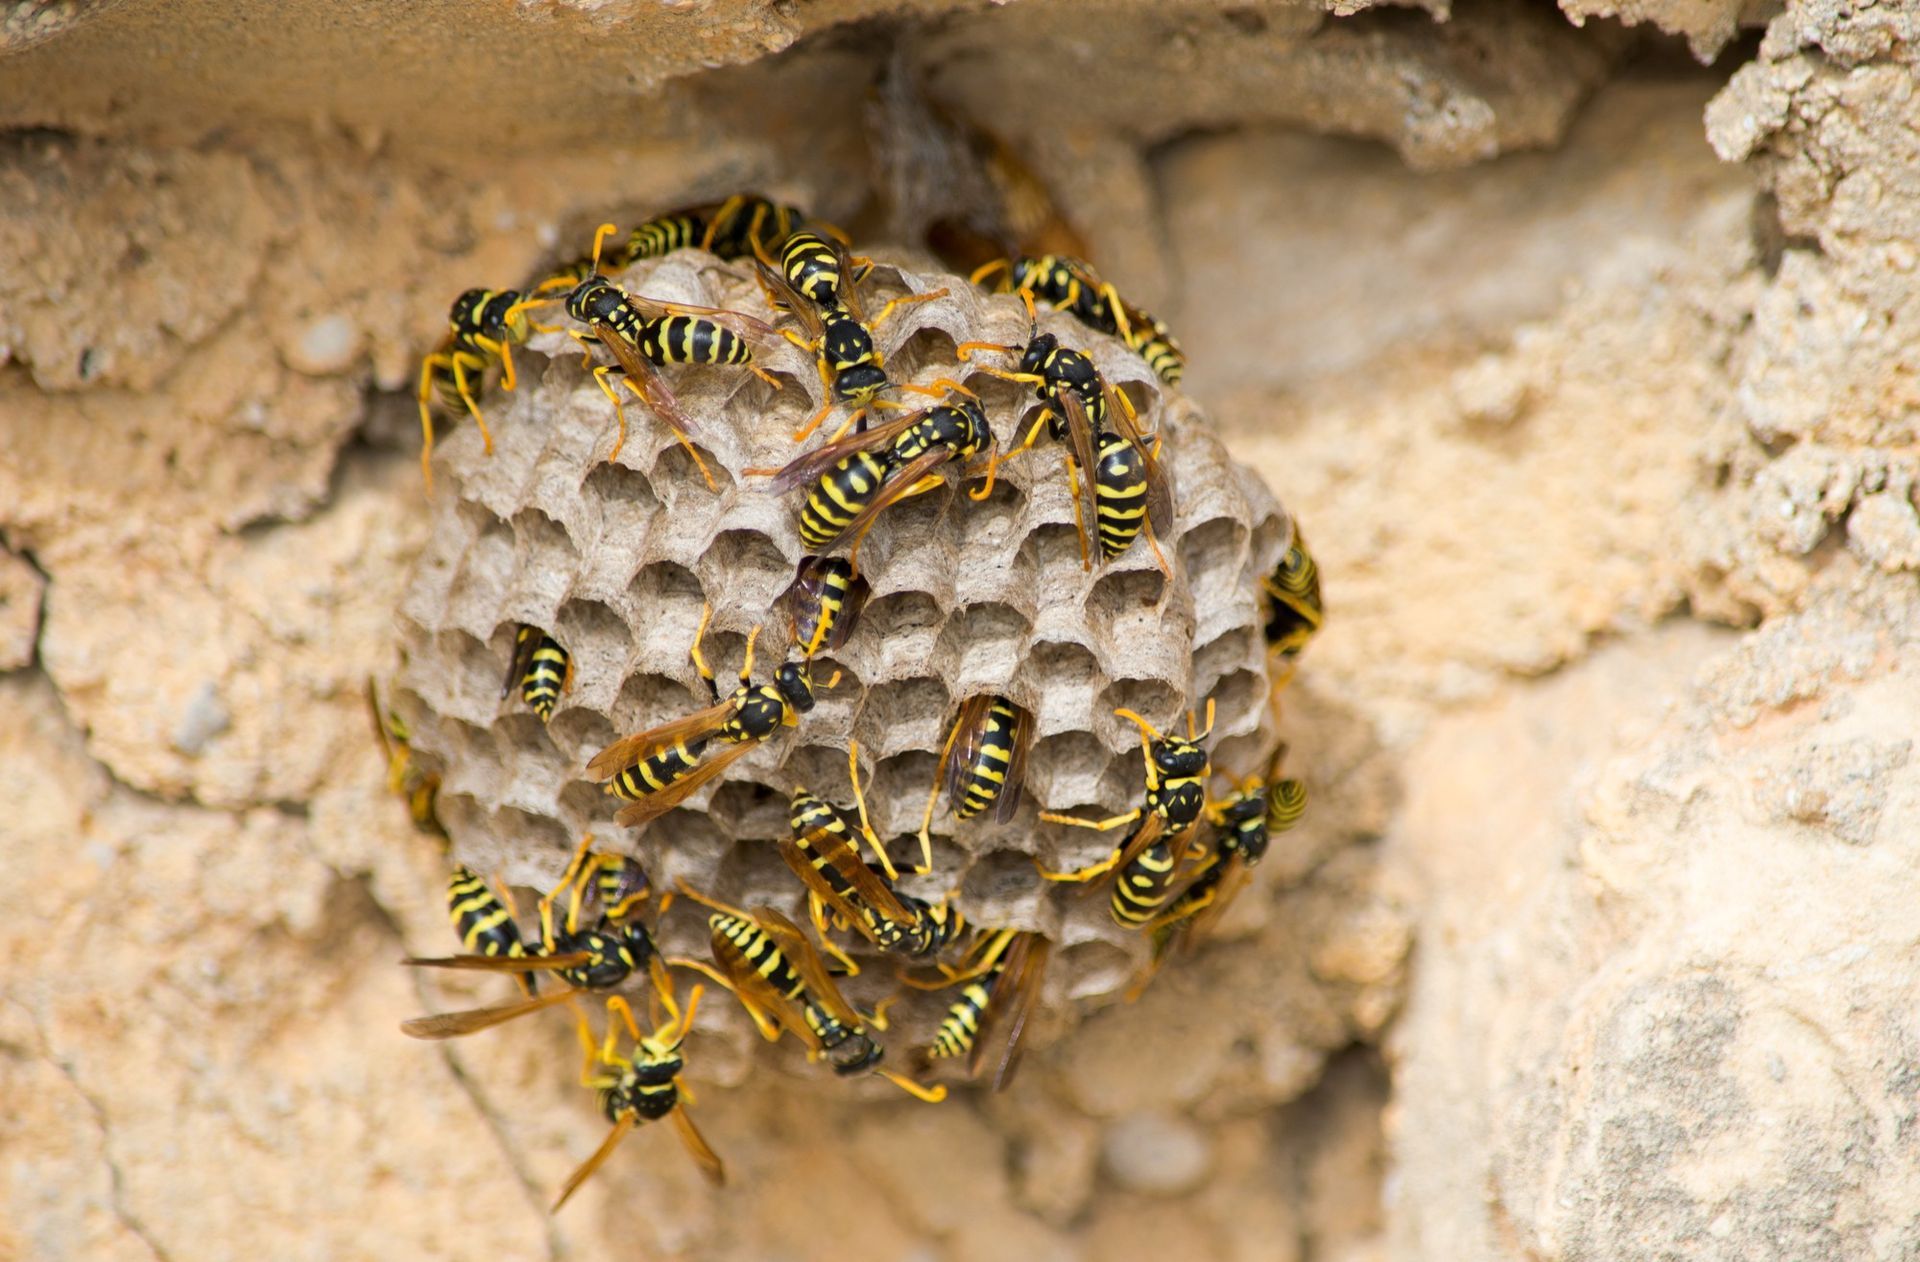 wasps control